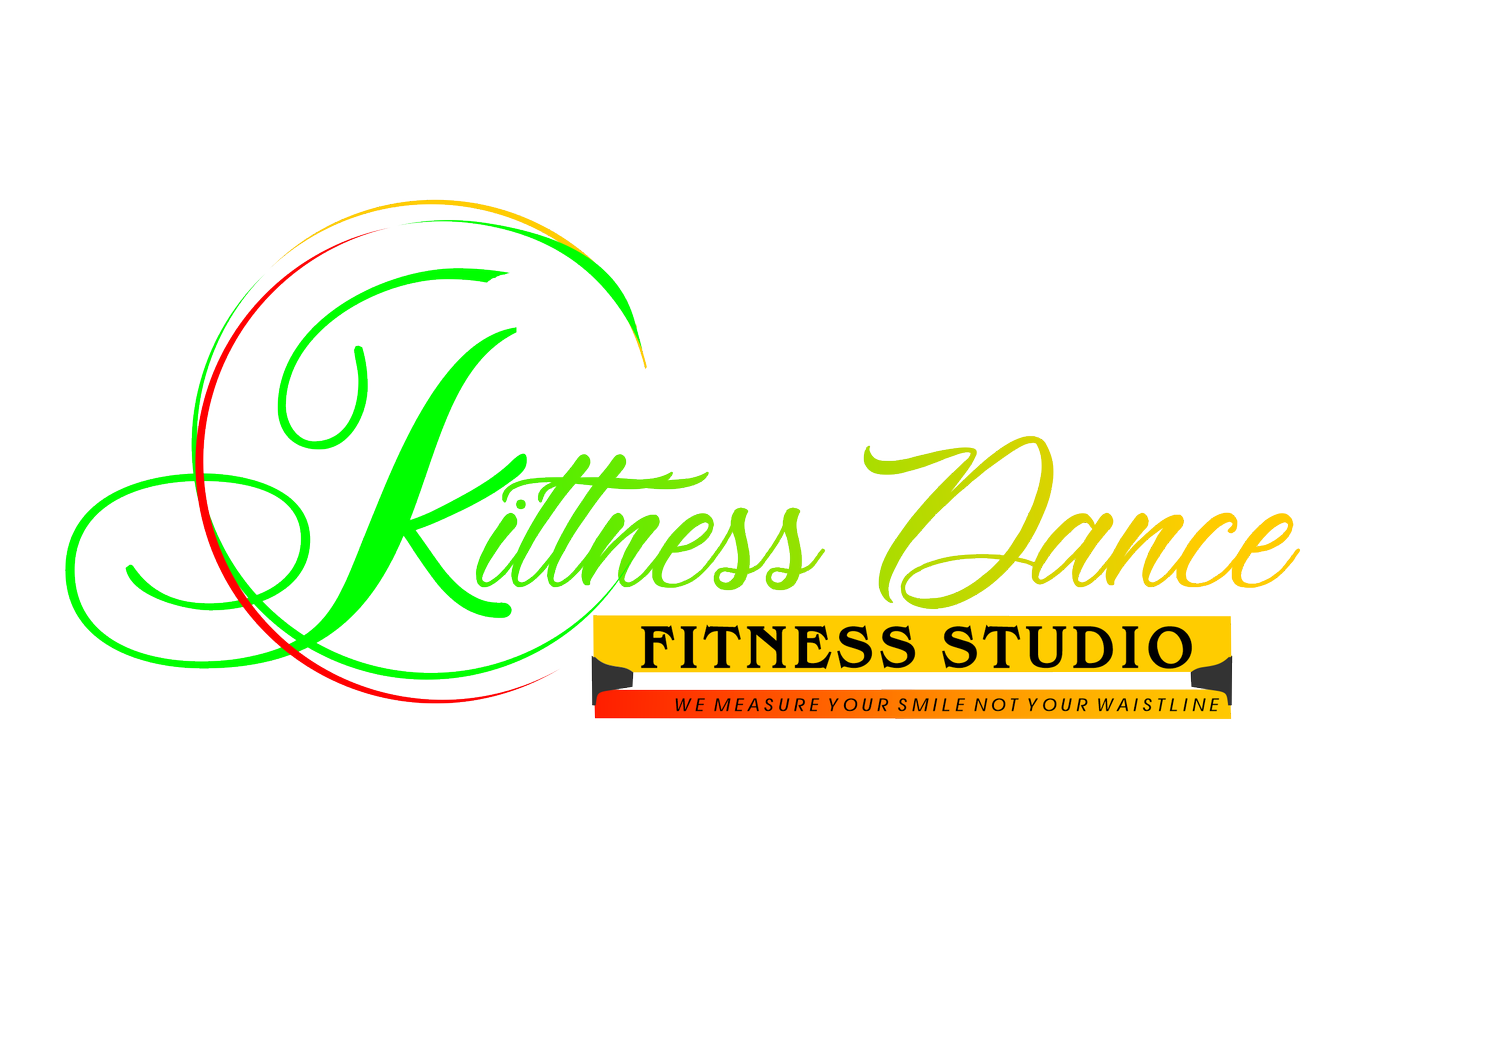 Kittness Dance Fitness Studio 